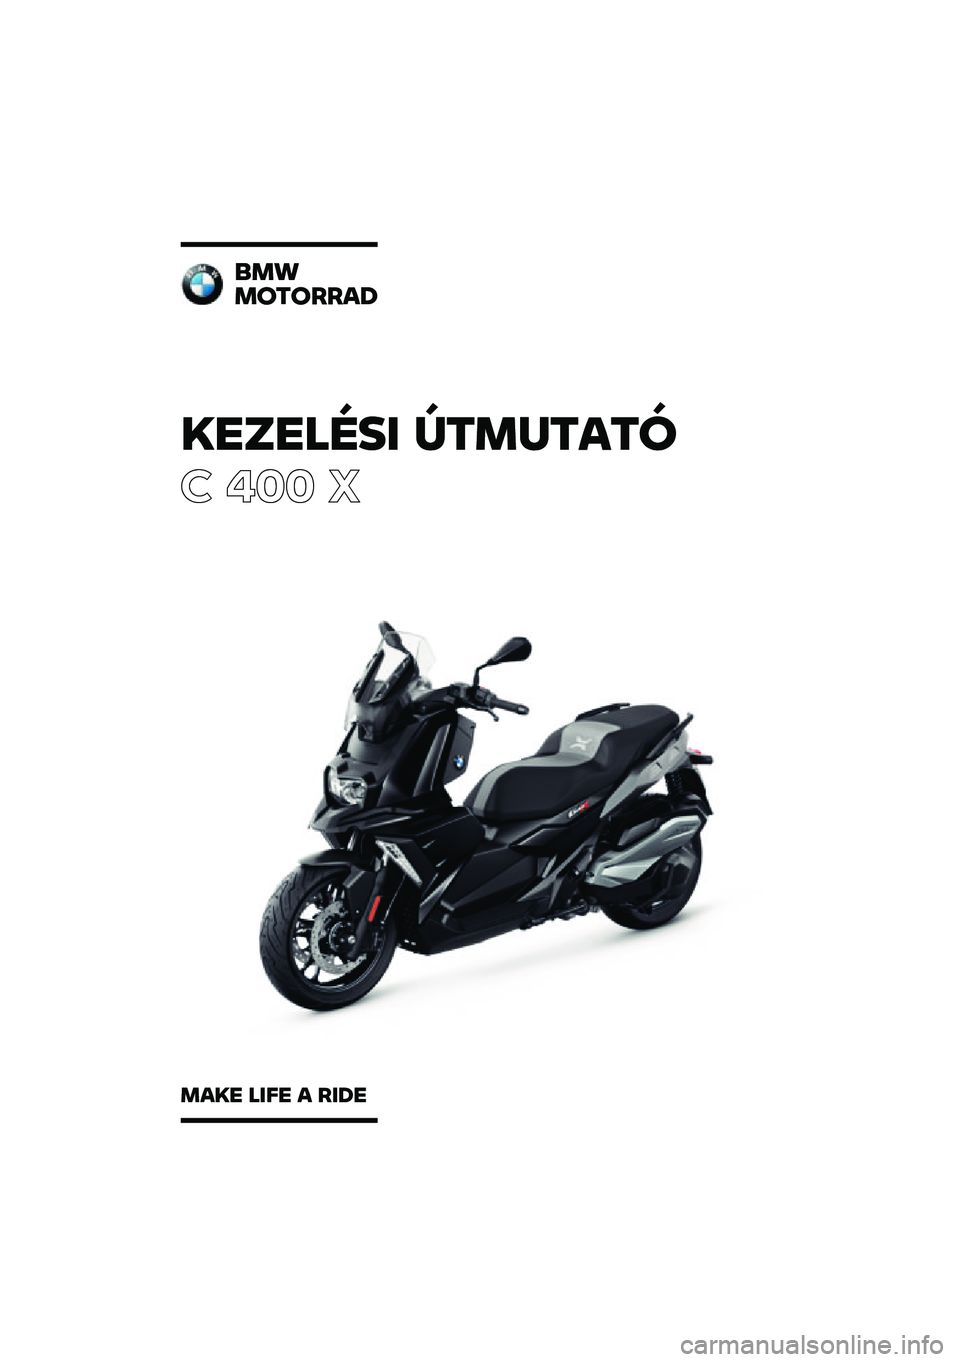 BMW MOTORRAD C 400 X 2020  Kezelési útmutató (in Hungarian) �������\b�	 �
�\f�
��\f��\f�
� ��� �
��
�
�
��\f�����
�
��� ��	�� � ��	�� 